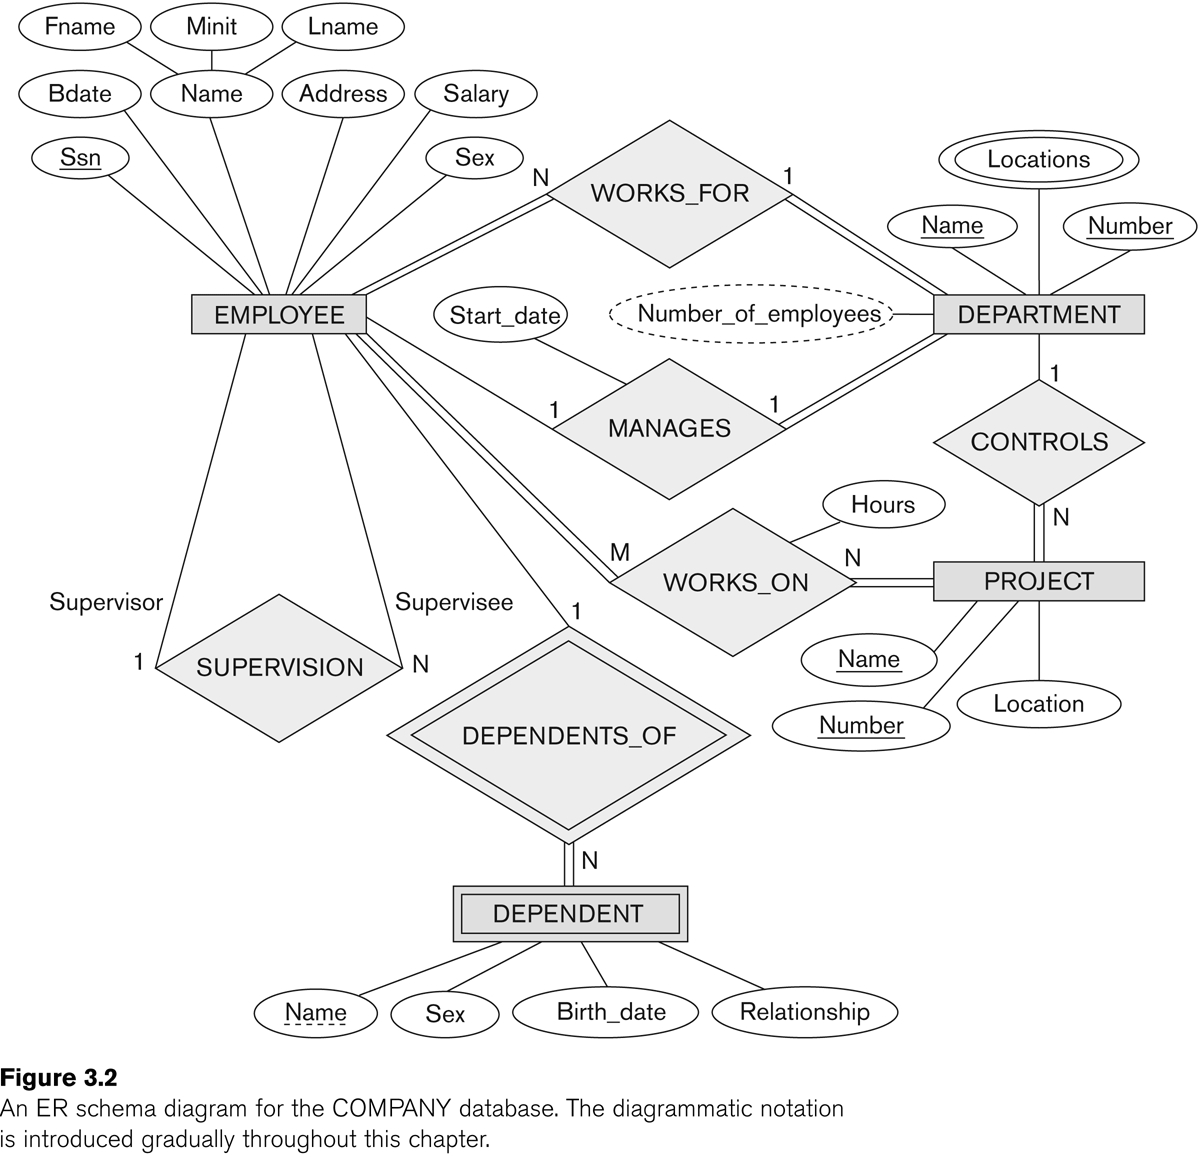 Entity-Relationship Modeling intended for Explain Entity Relationship Model